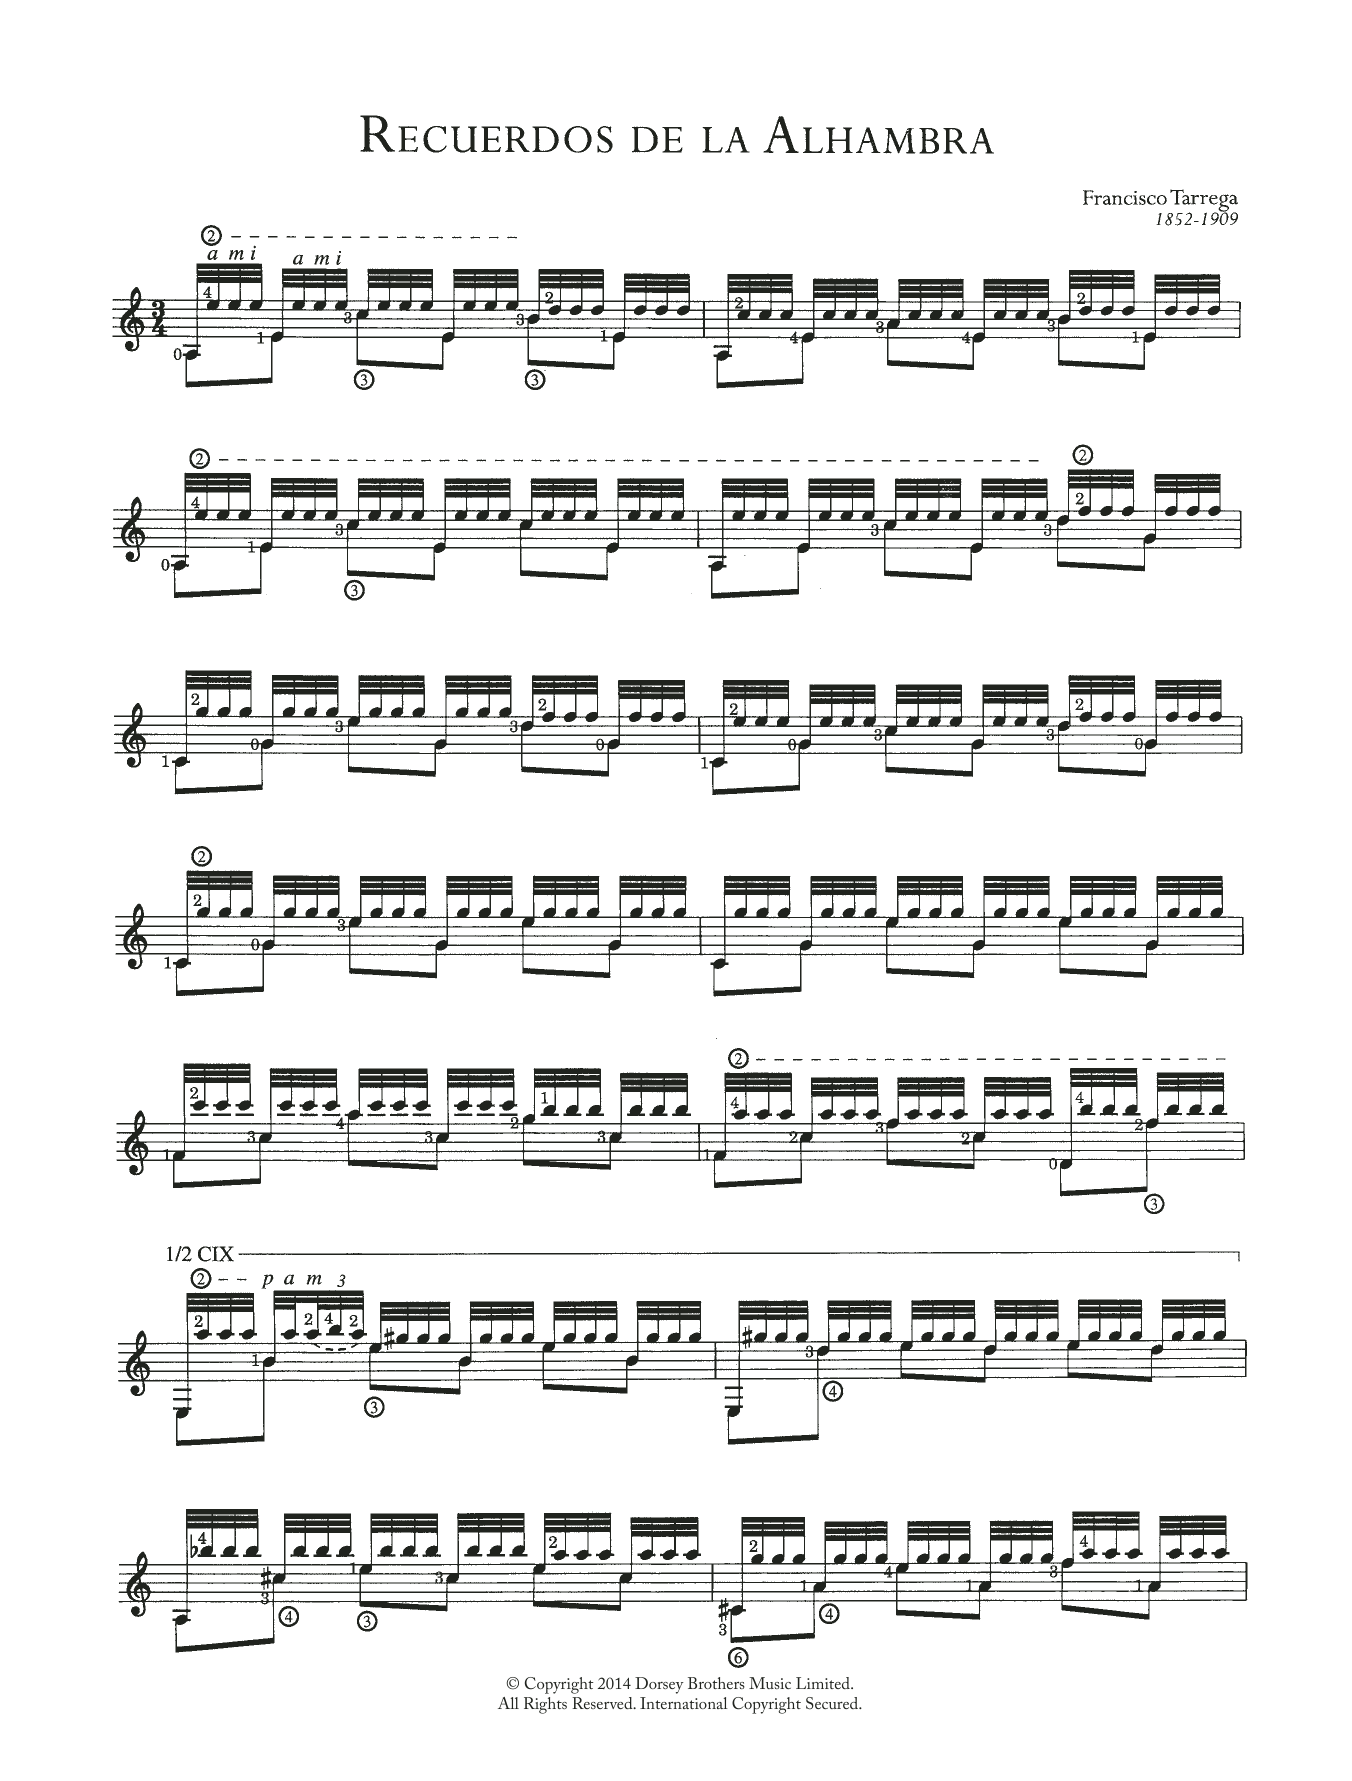 Francisco Tárrega Recuerdos de la Alhambra Sheet Music Notes & Chords for String Solo - Download or Print PDF